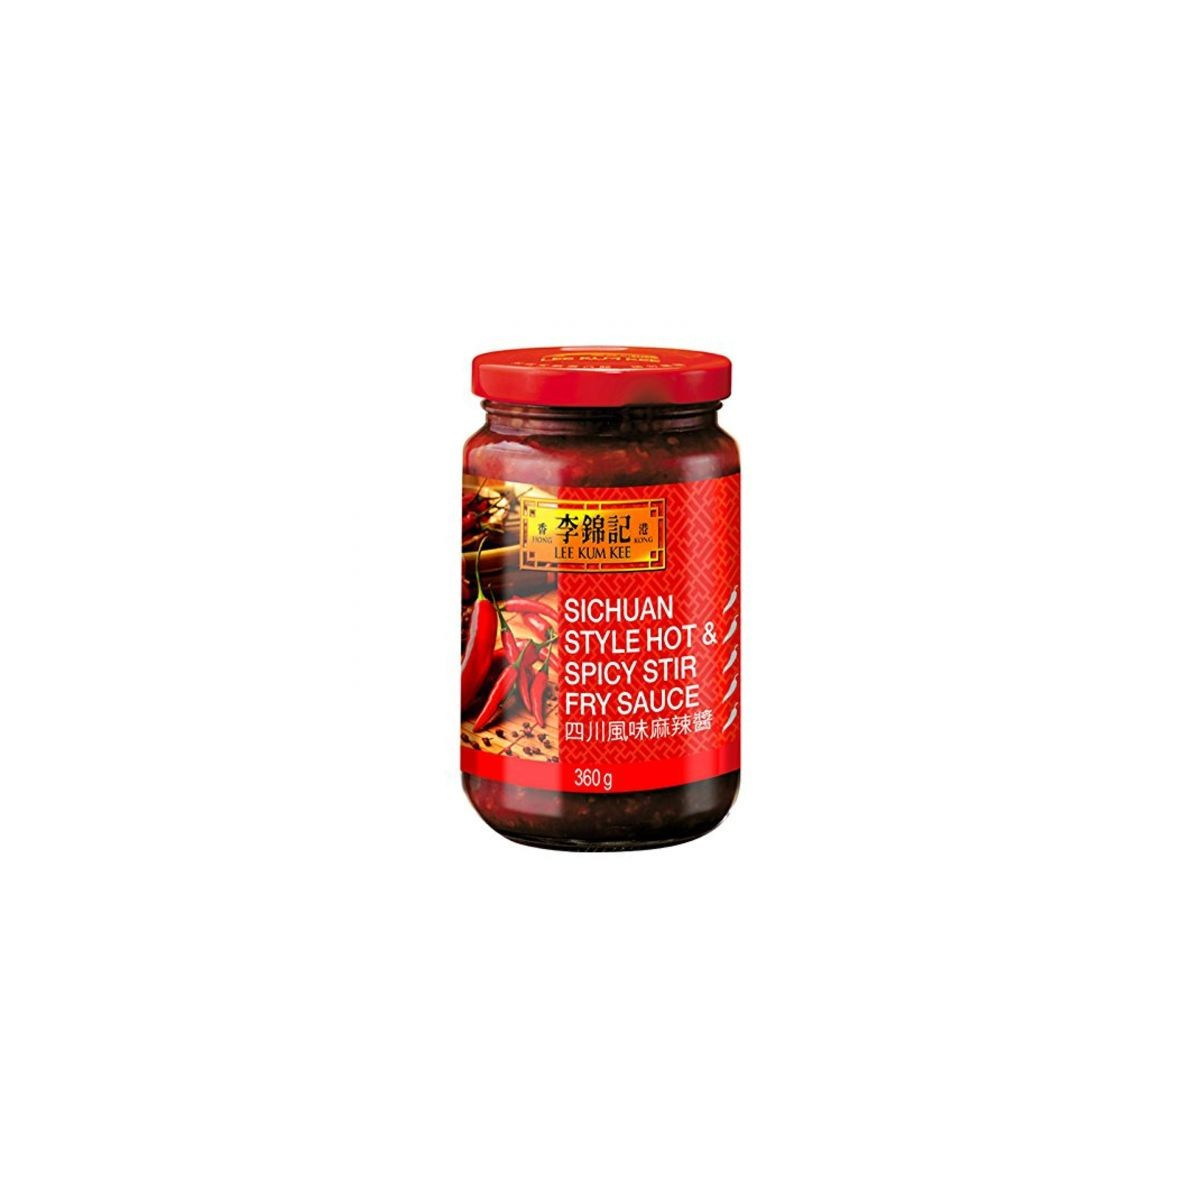 Sichuan Hot & Spicy Sauce 360g - LKK